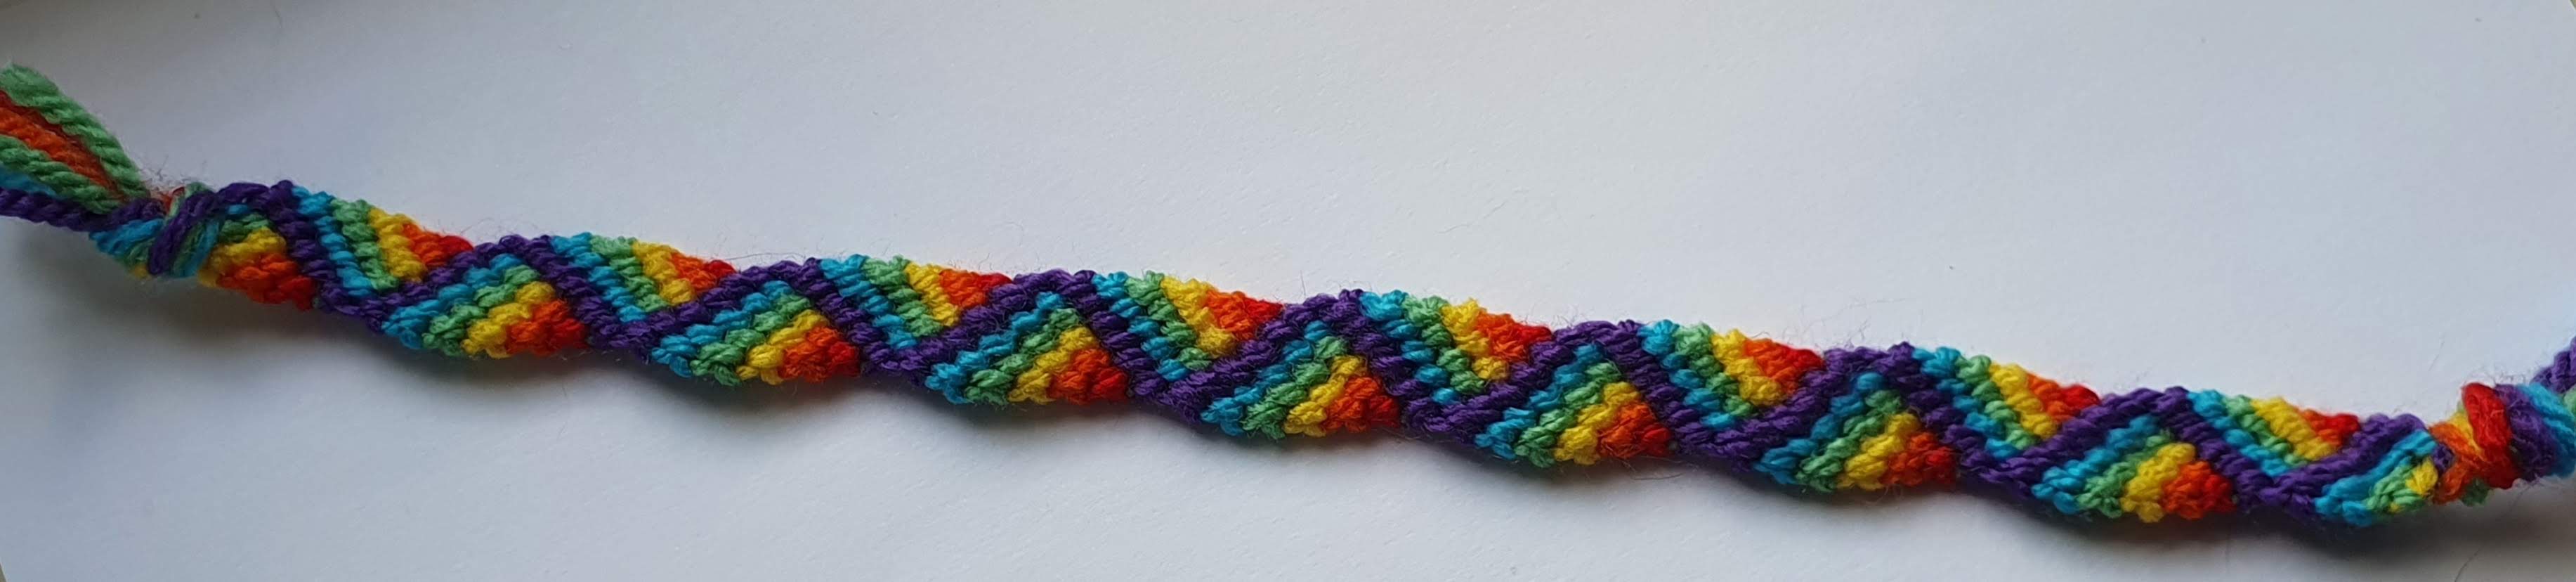 Bracelet with rainbow zigzags, looking like a folded ribbon